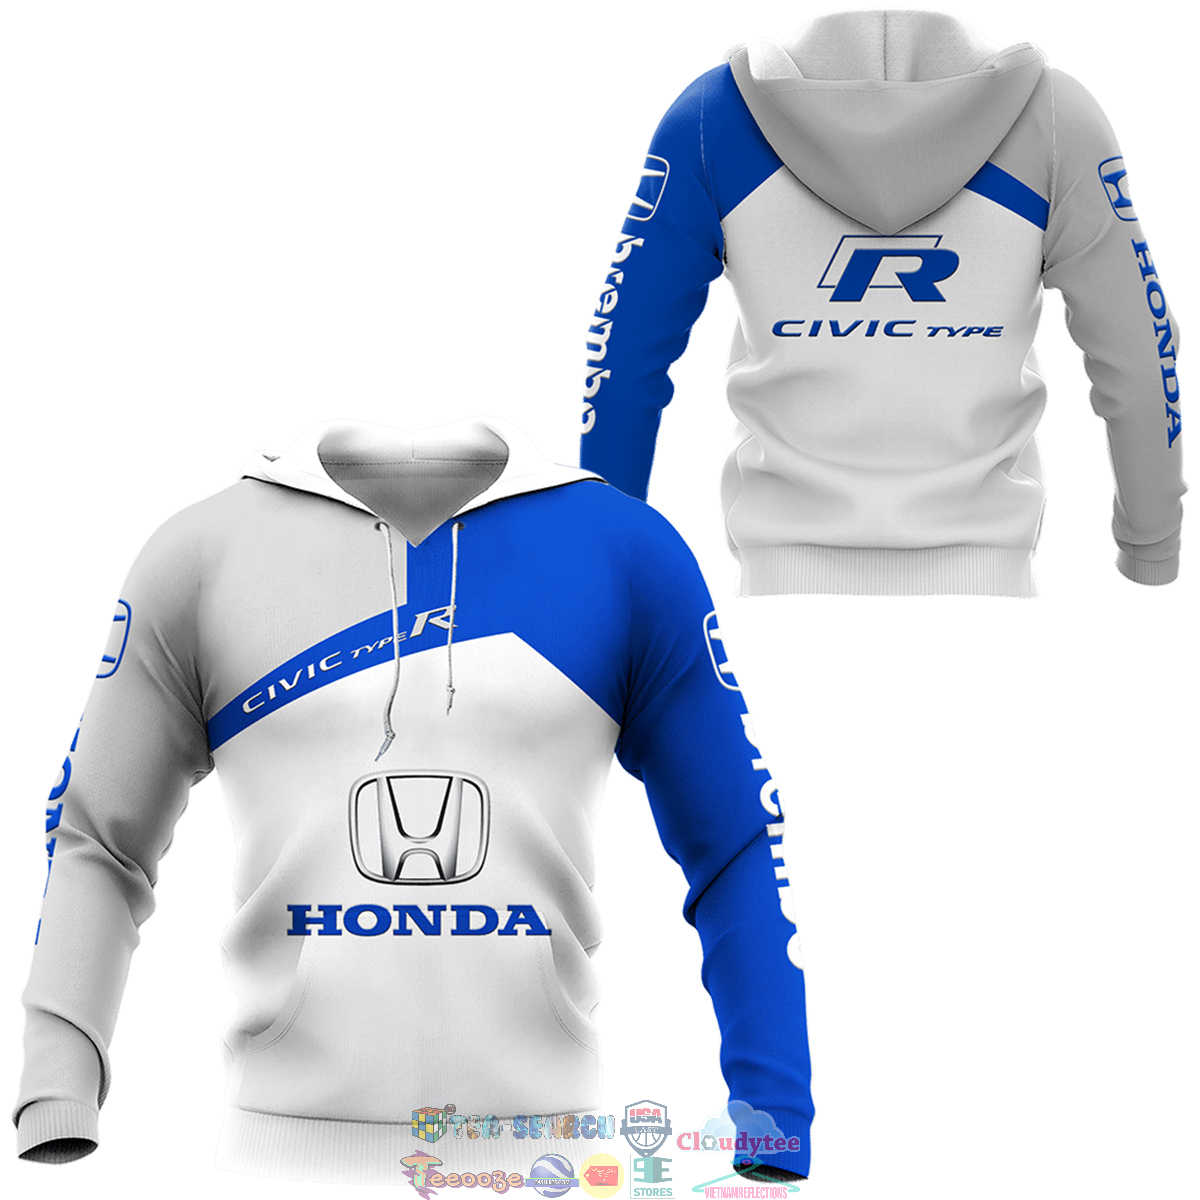 Honda Civic Type R ver 7 3D hoodie and t-shirt – Saleoff